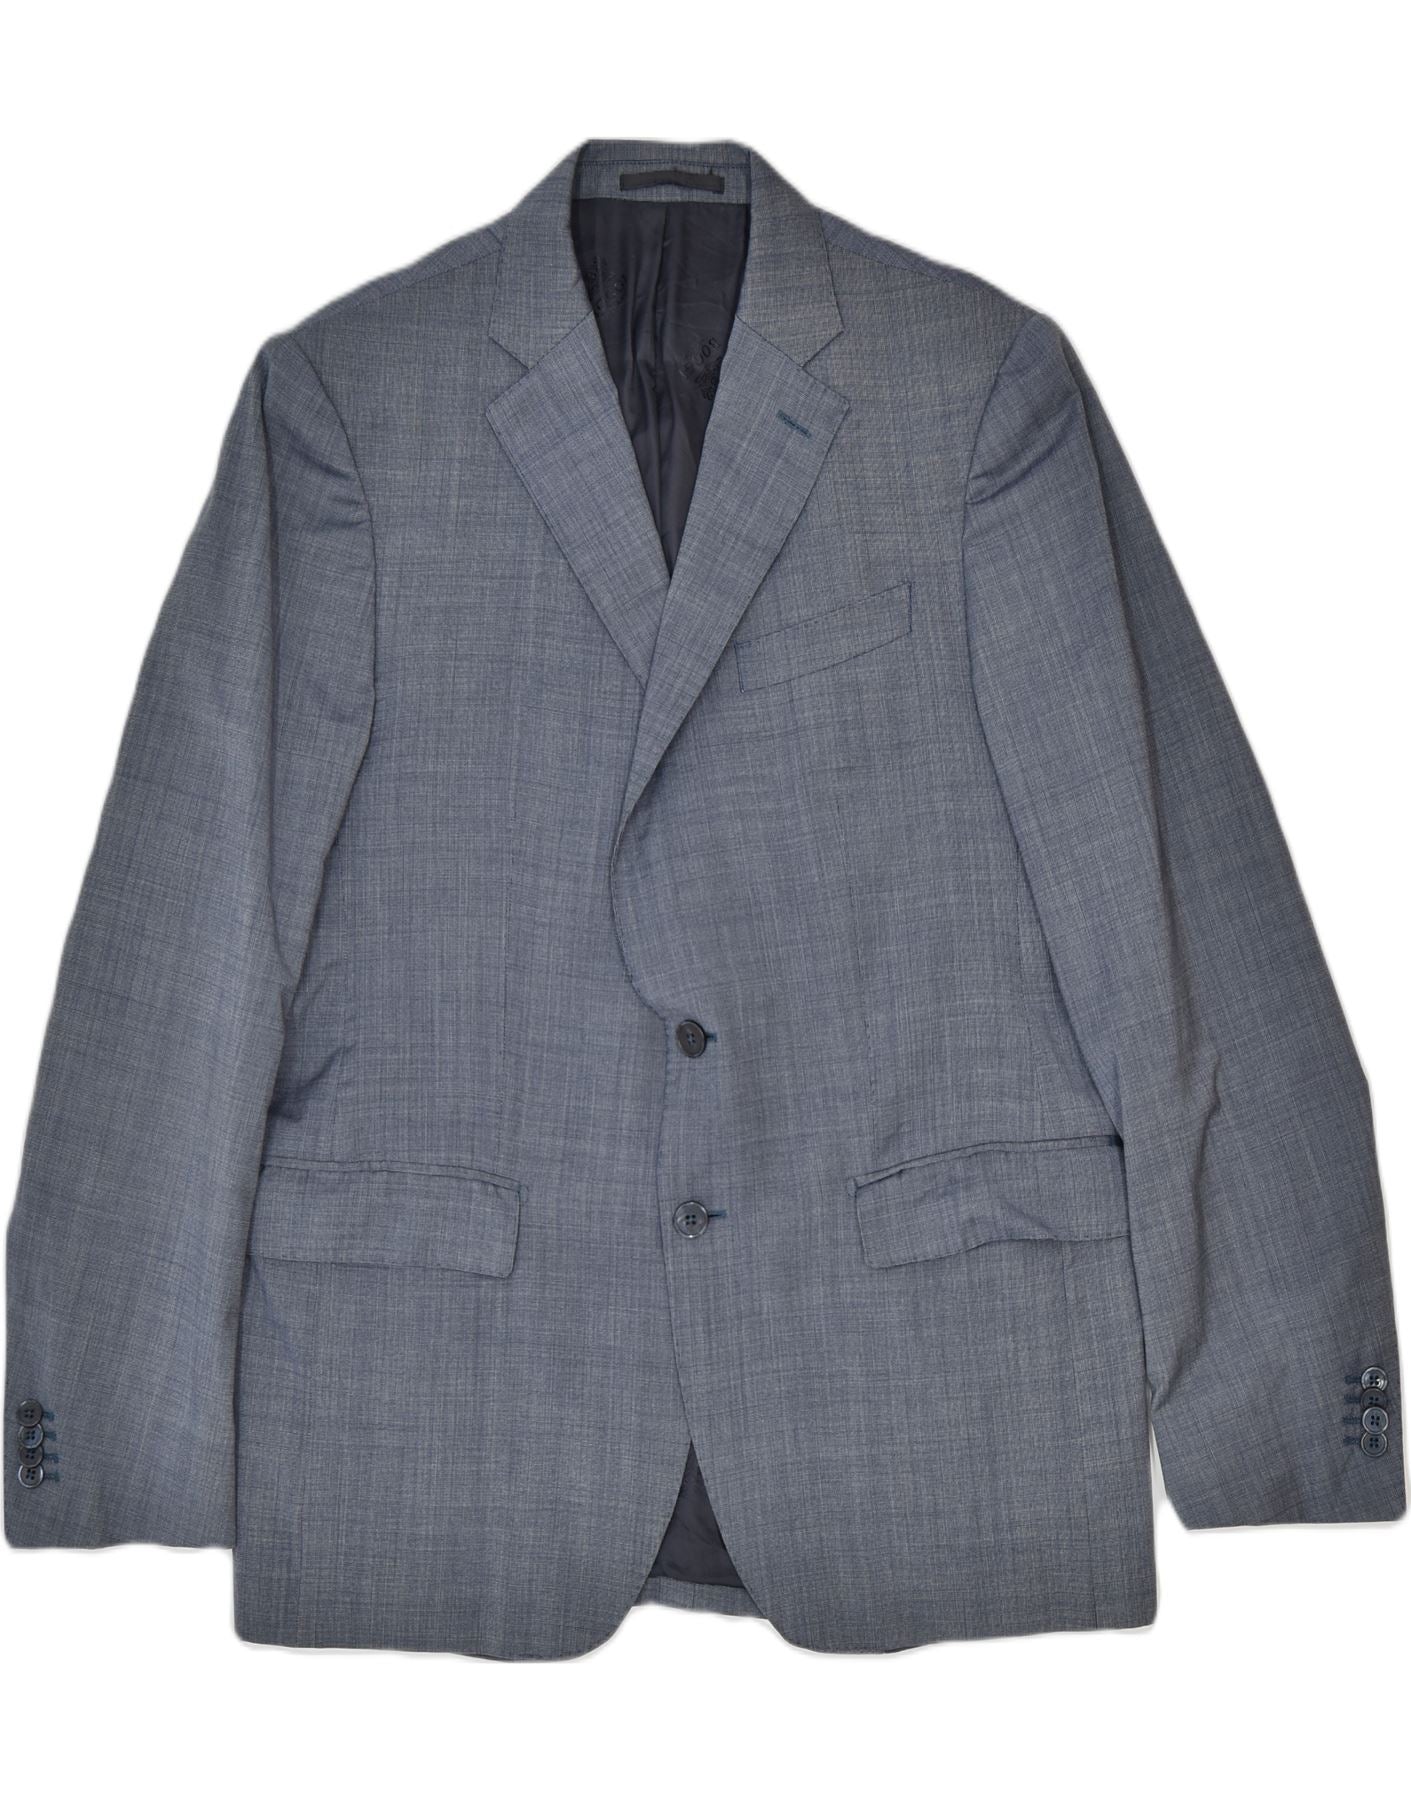 BOGGI MILANO Mens 2 Button Blazer Jacket IT 52 XL Grey Wool